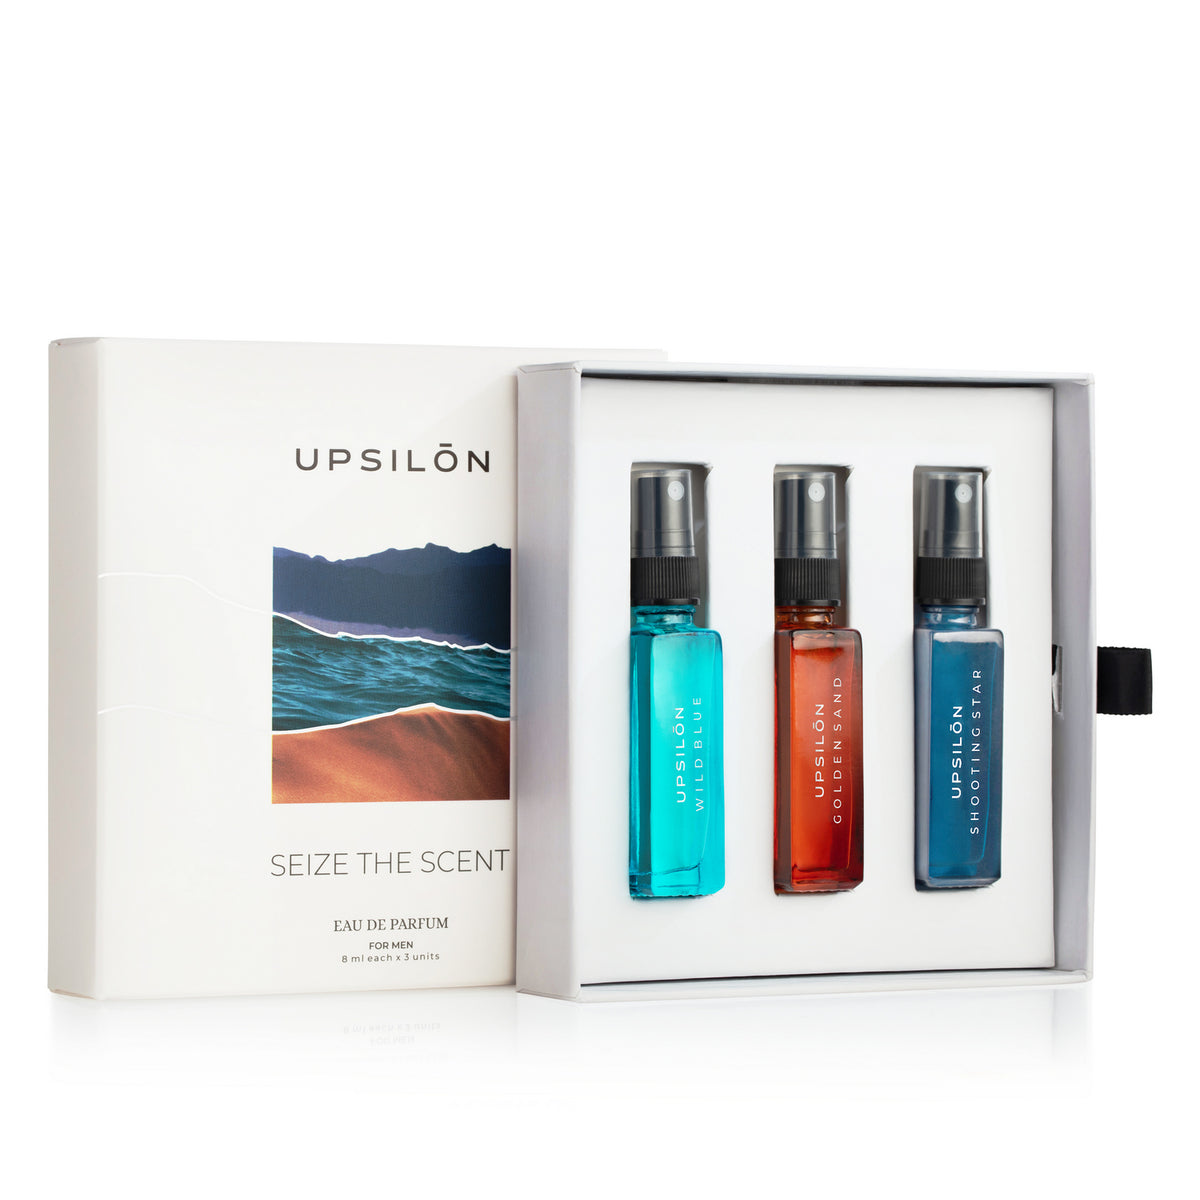 Upsilon Seize The Scent Discovery Set Eau De Parfum For Men, a gift set containing three 8ml bottles of Upsilon's most popular fragrances: Wild Blue, Golden Sand, and Shooting Star